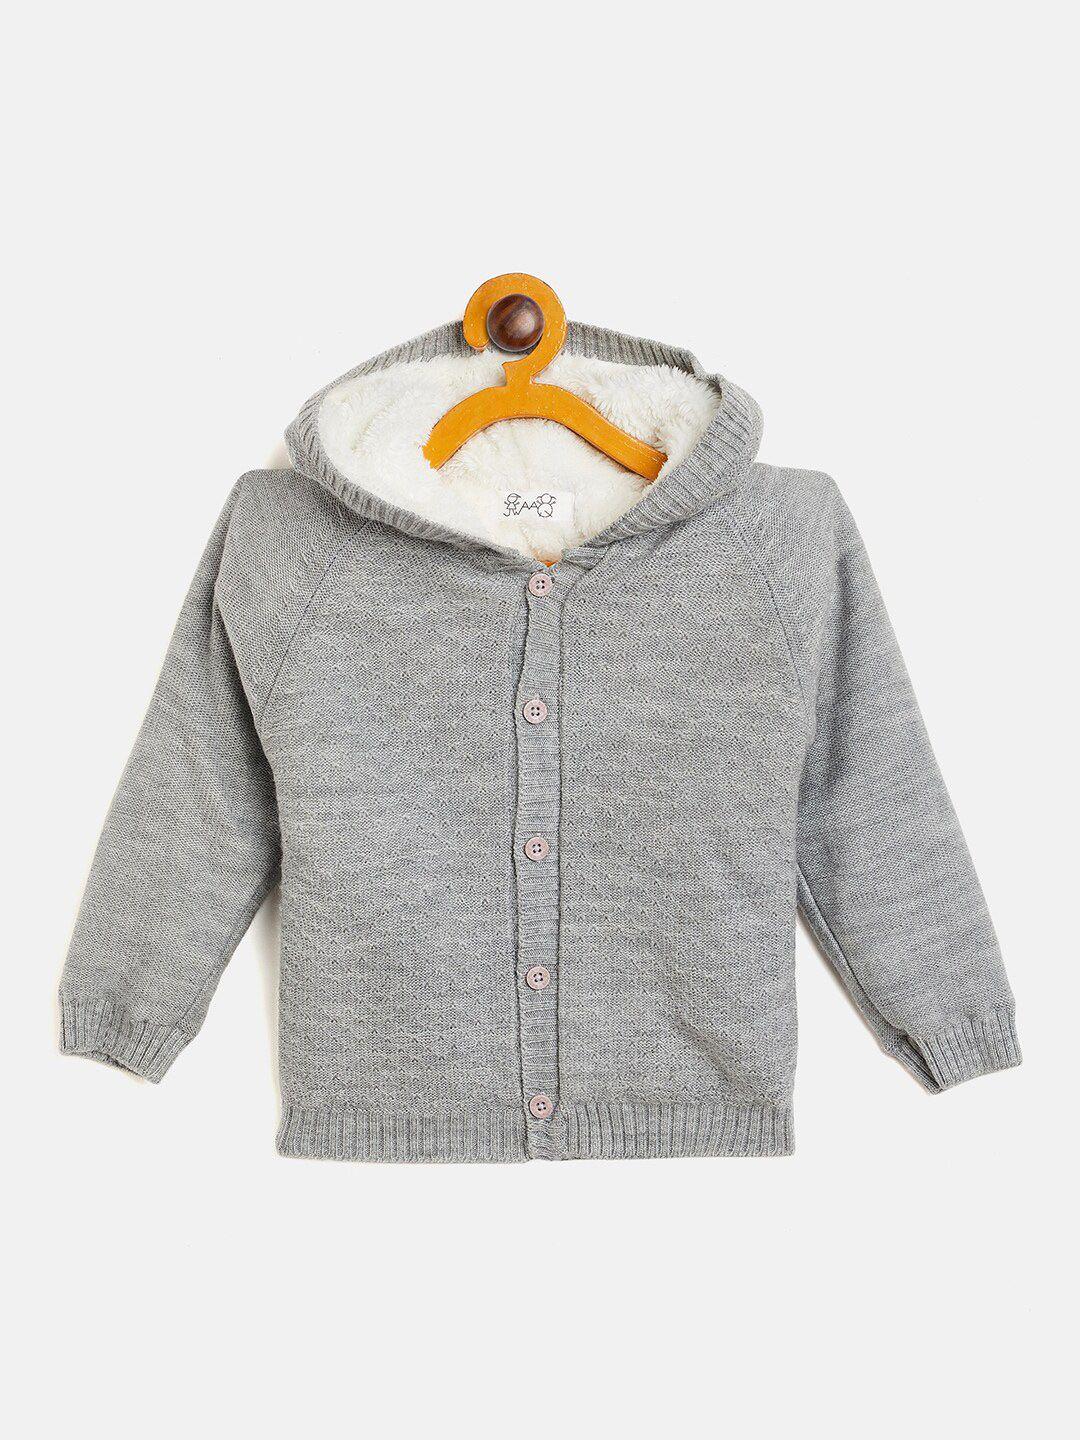 jwaaq infants kids hooded pure cotton cardigan sweater